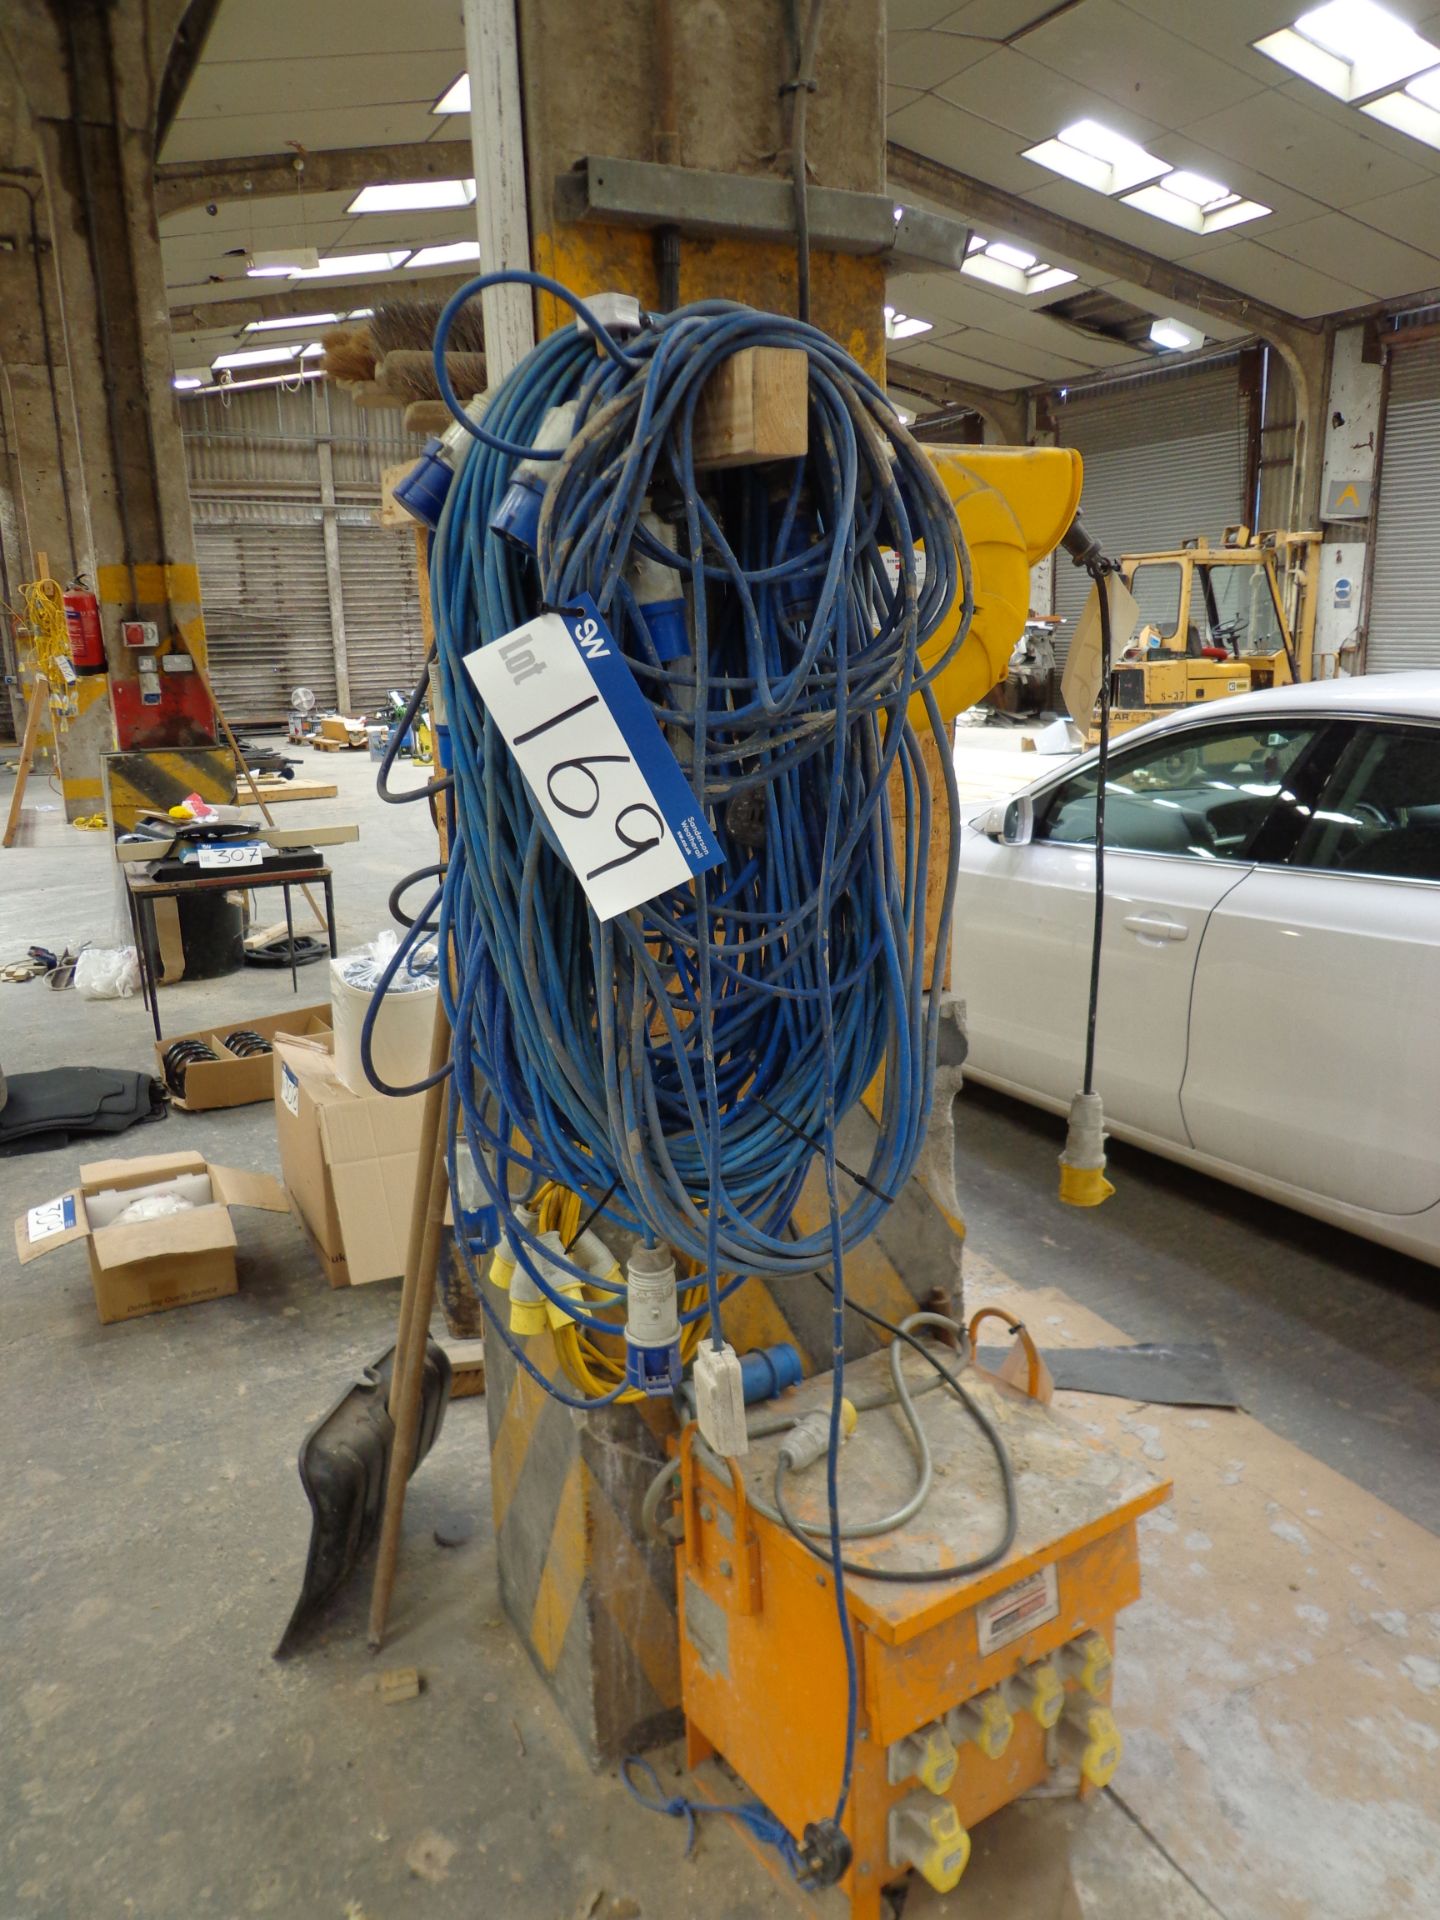 Seven 240V Extension Cables